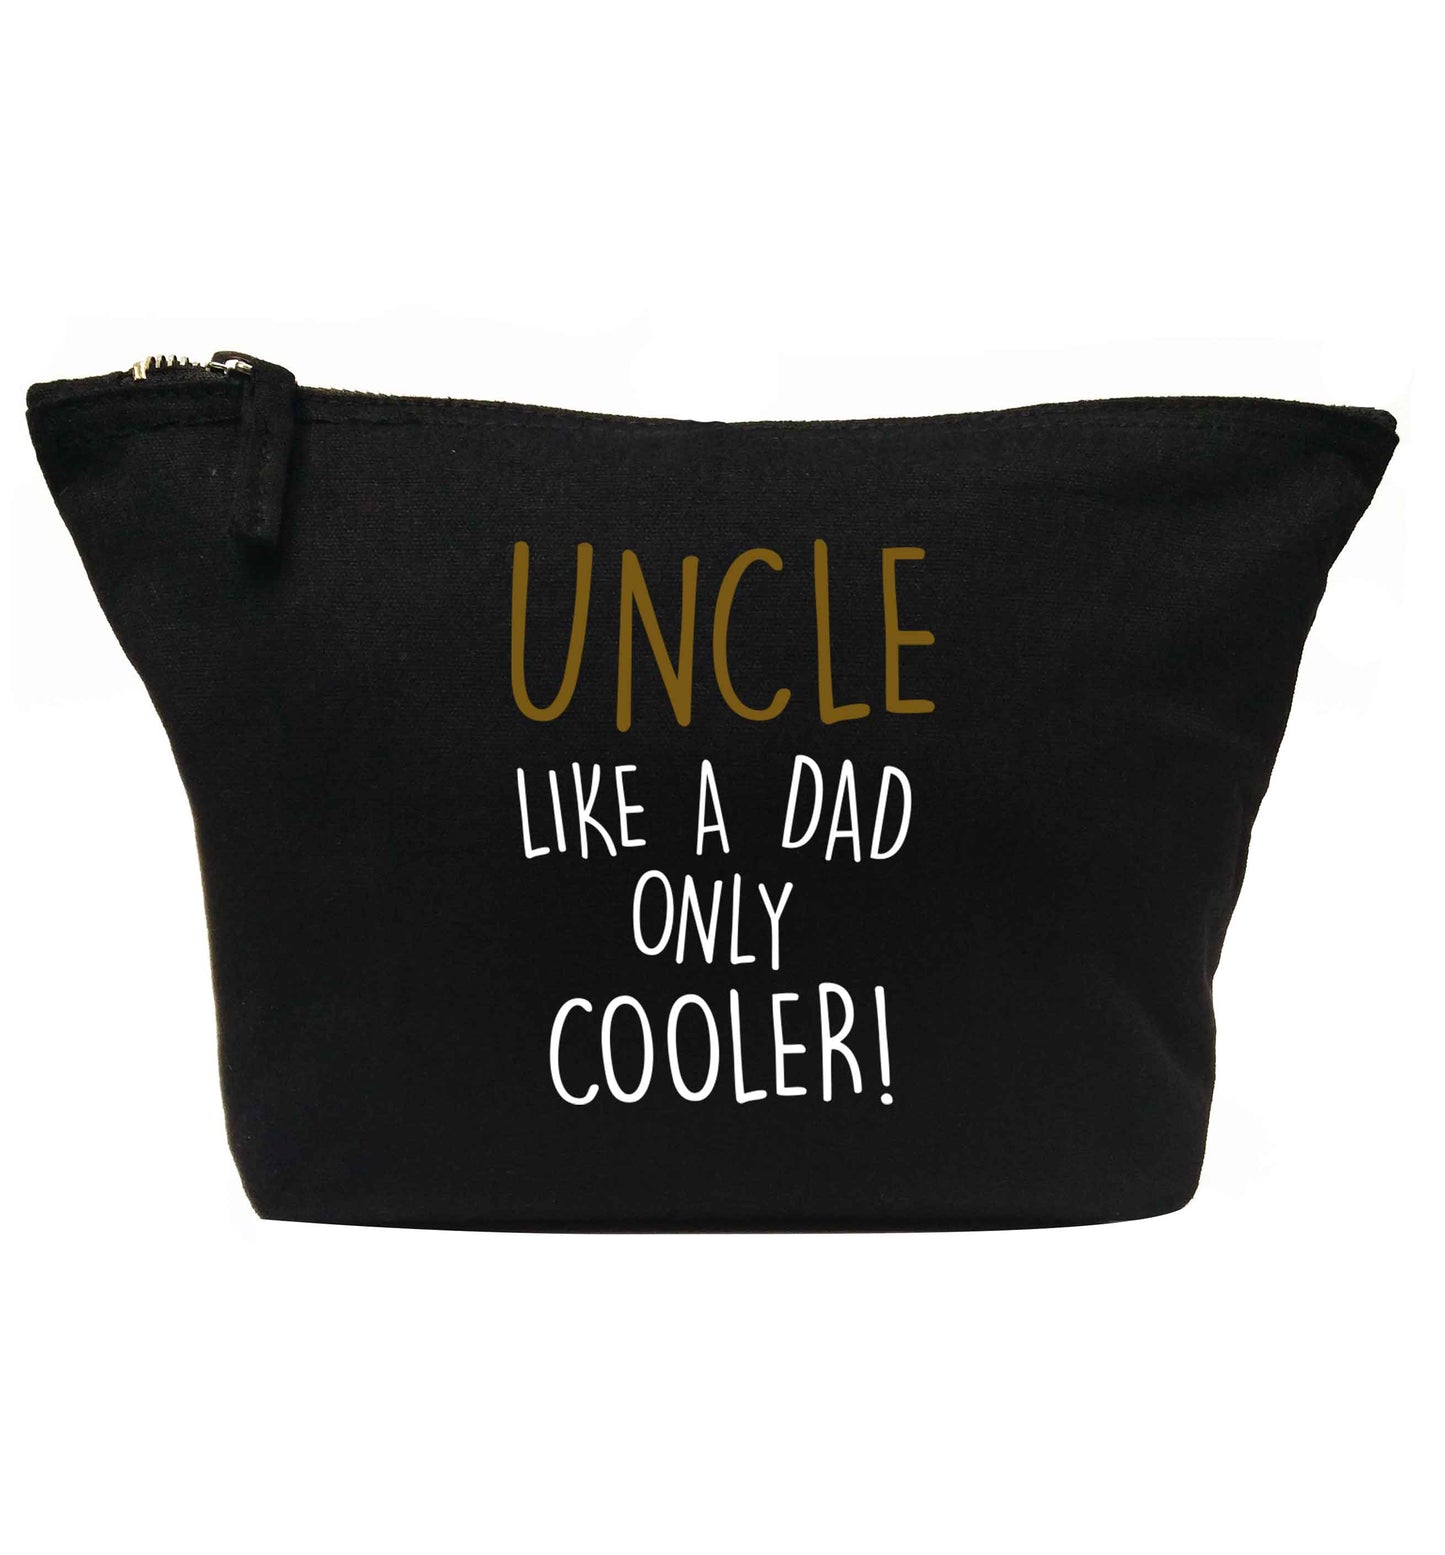 Uncle like a dad only cooler | Makeup / wash bag